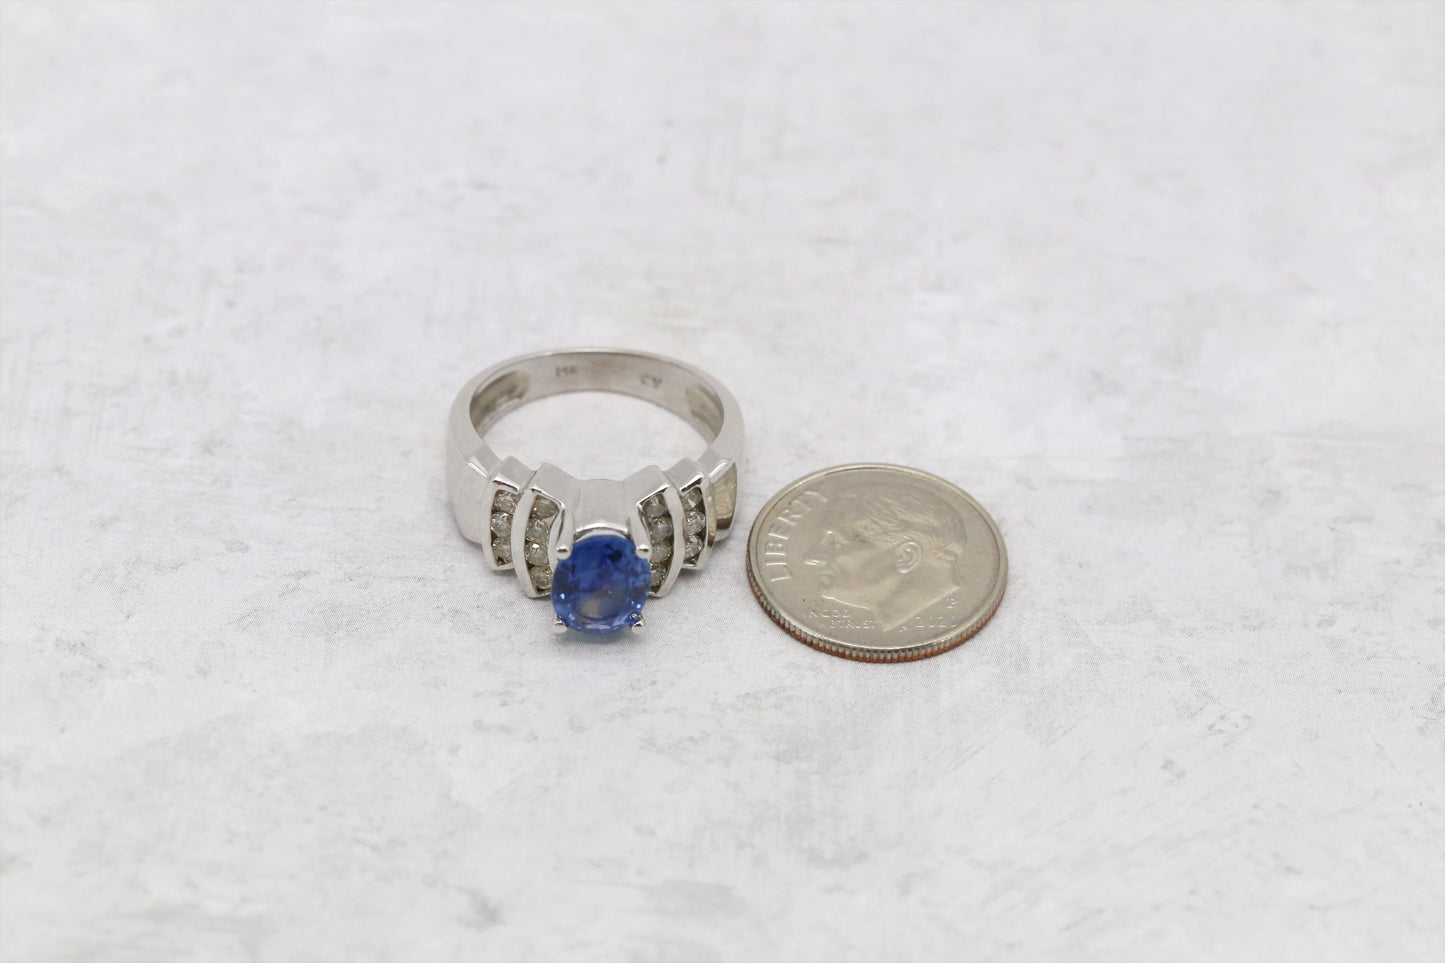 14k White Gold Ceylon Sapphire & Diamond Ring, Size 7 - 6.4g